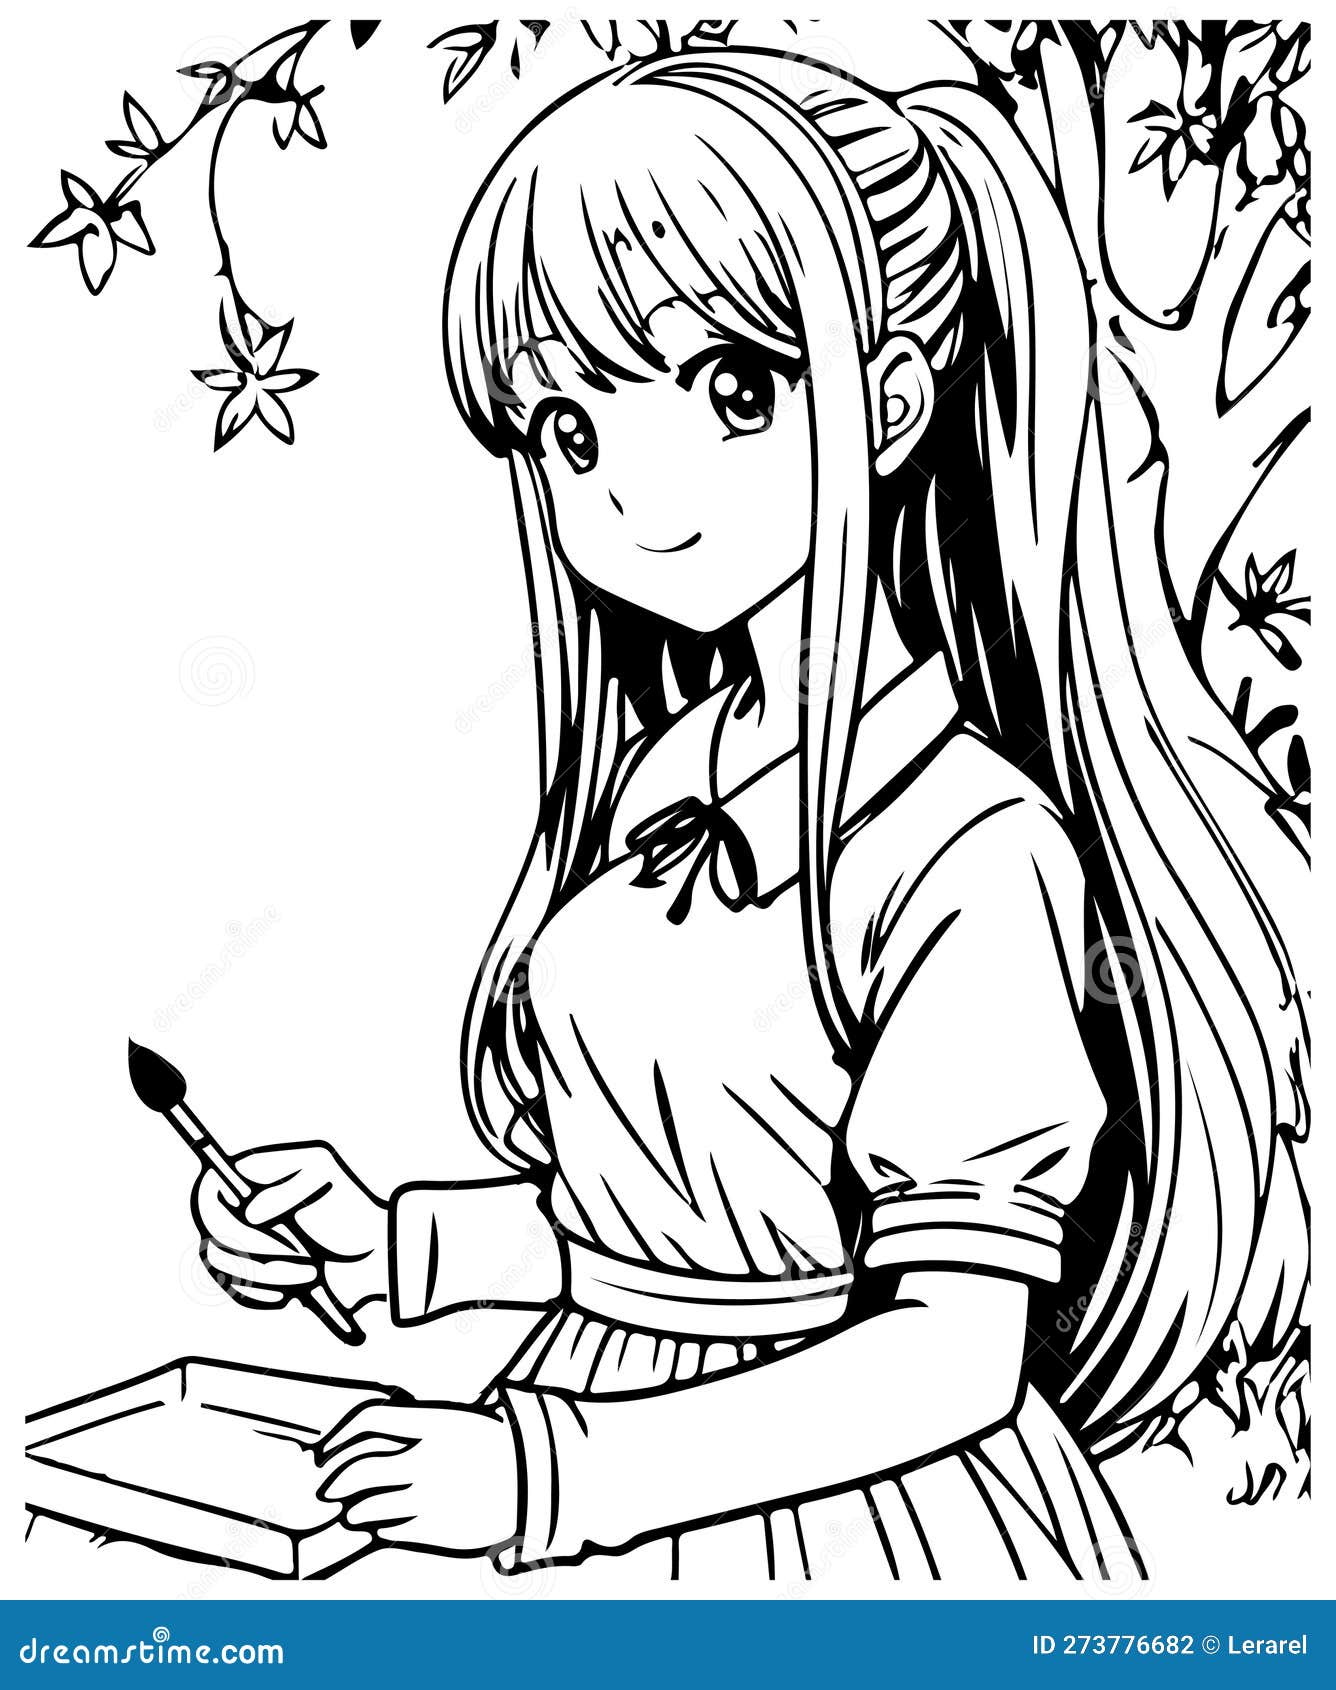 Anime girl drawing | Anime girl drawings, Drawings, Girl drawing-saigonsouth.com.vn